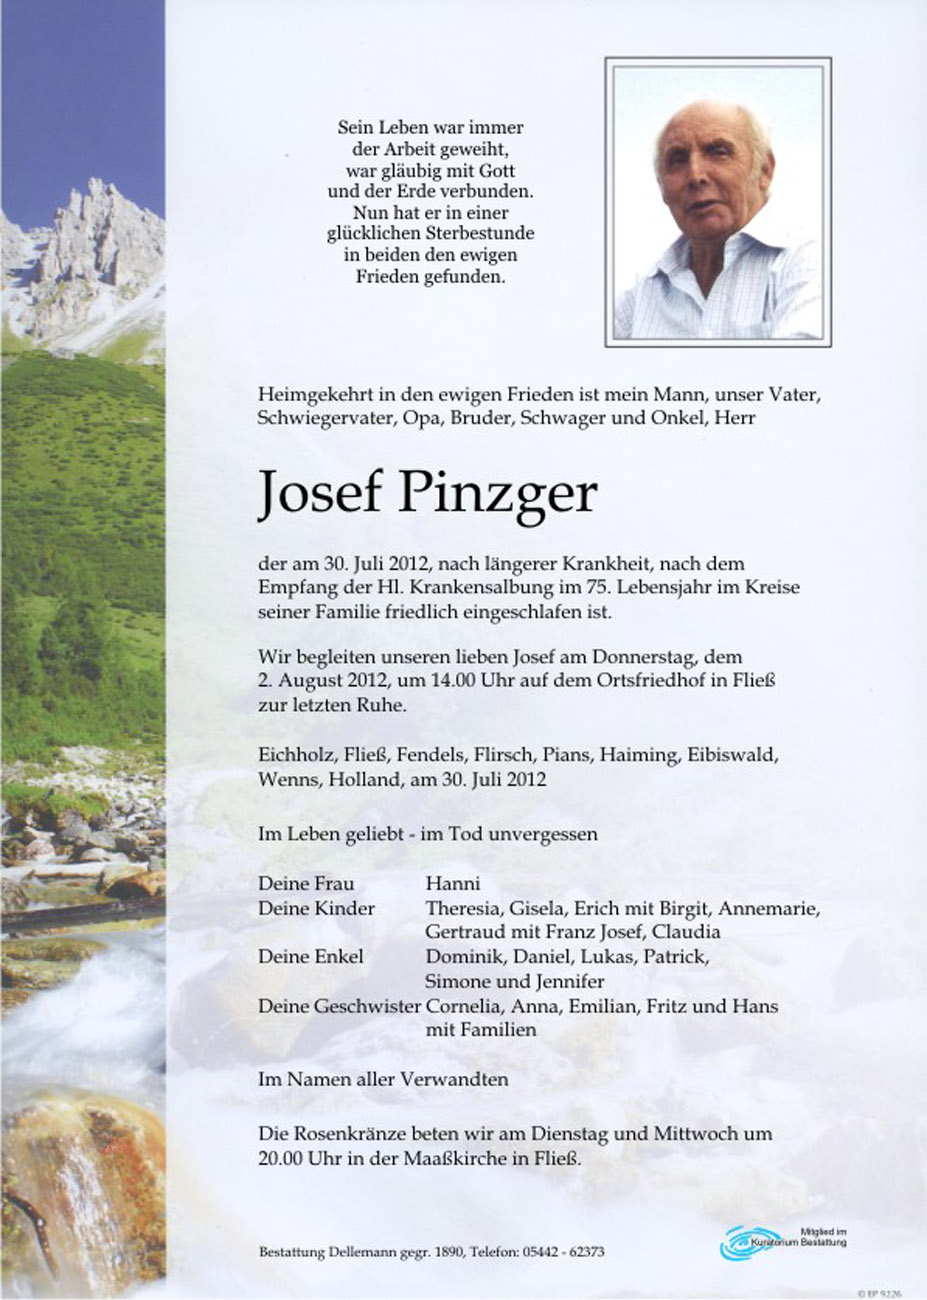   Josef Pinzger